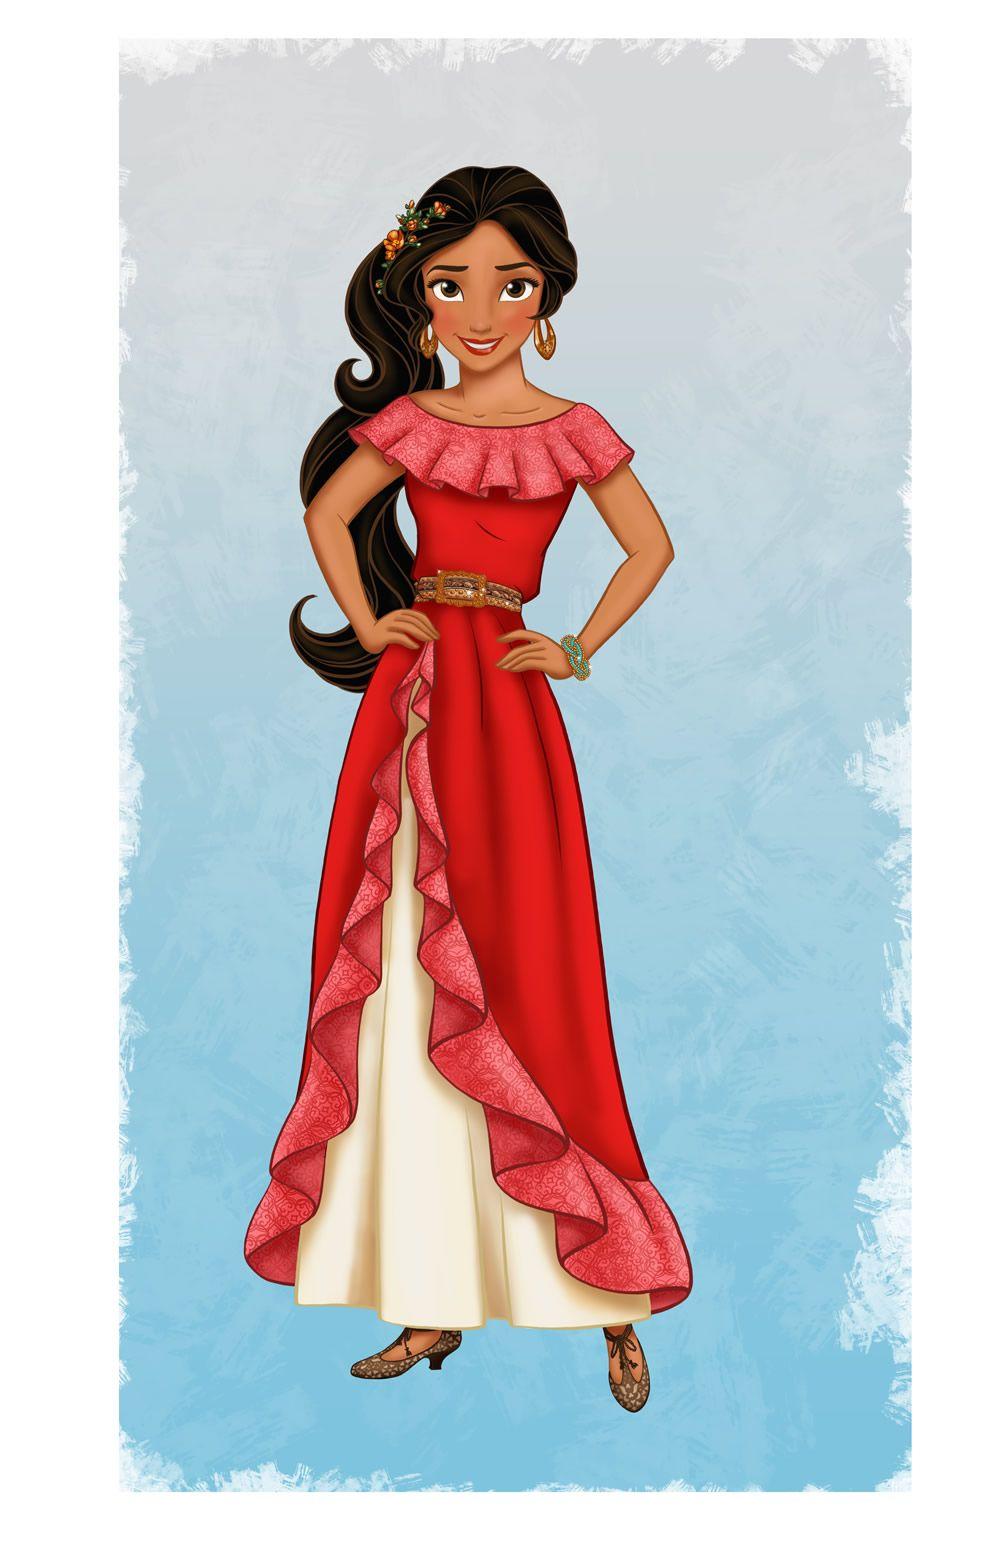 Meet Disney's Newest Princess, Elena of Avalor!